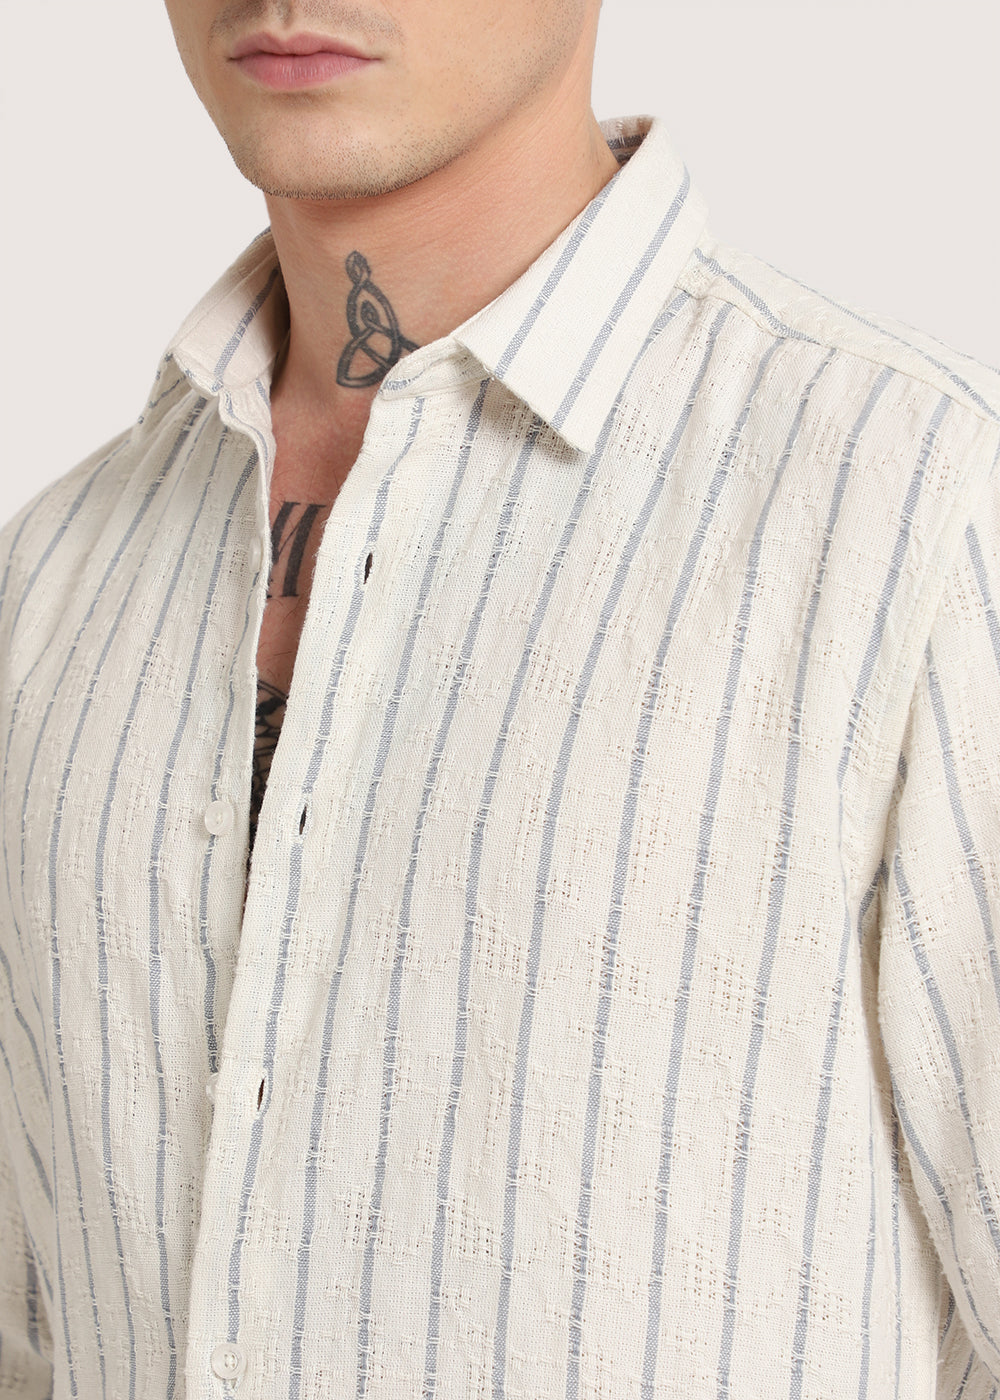 Blue Stripe Textured Shirt